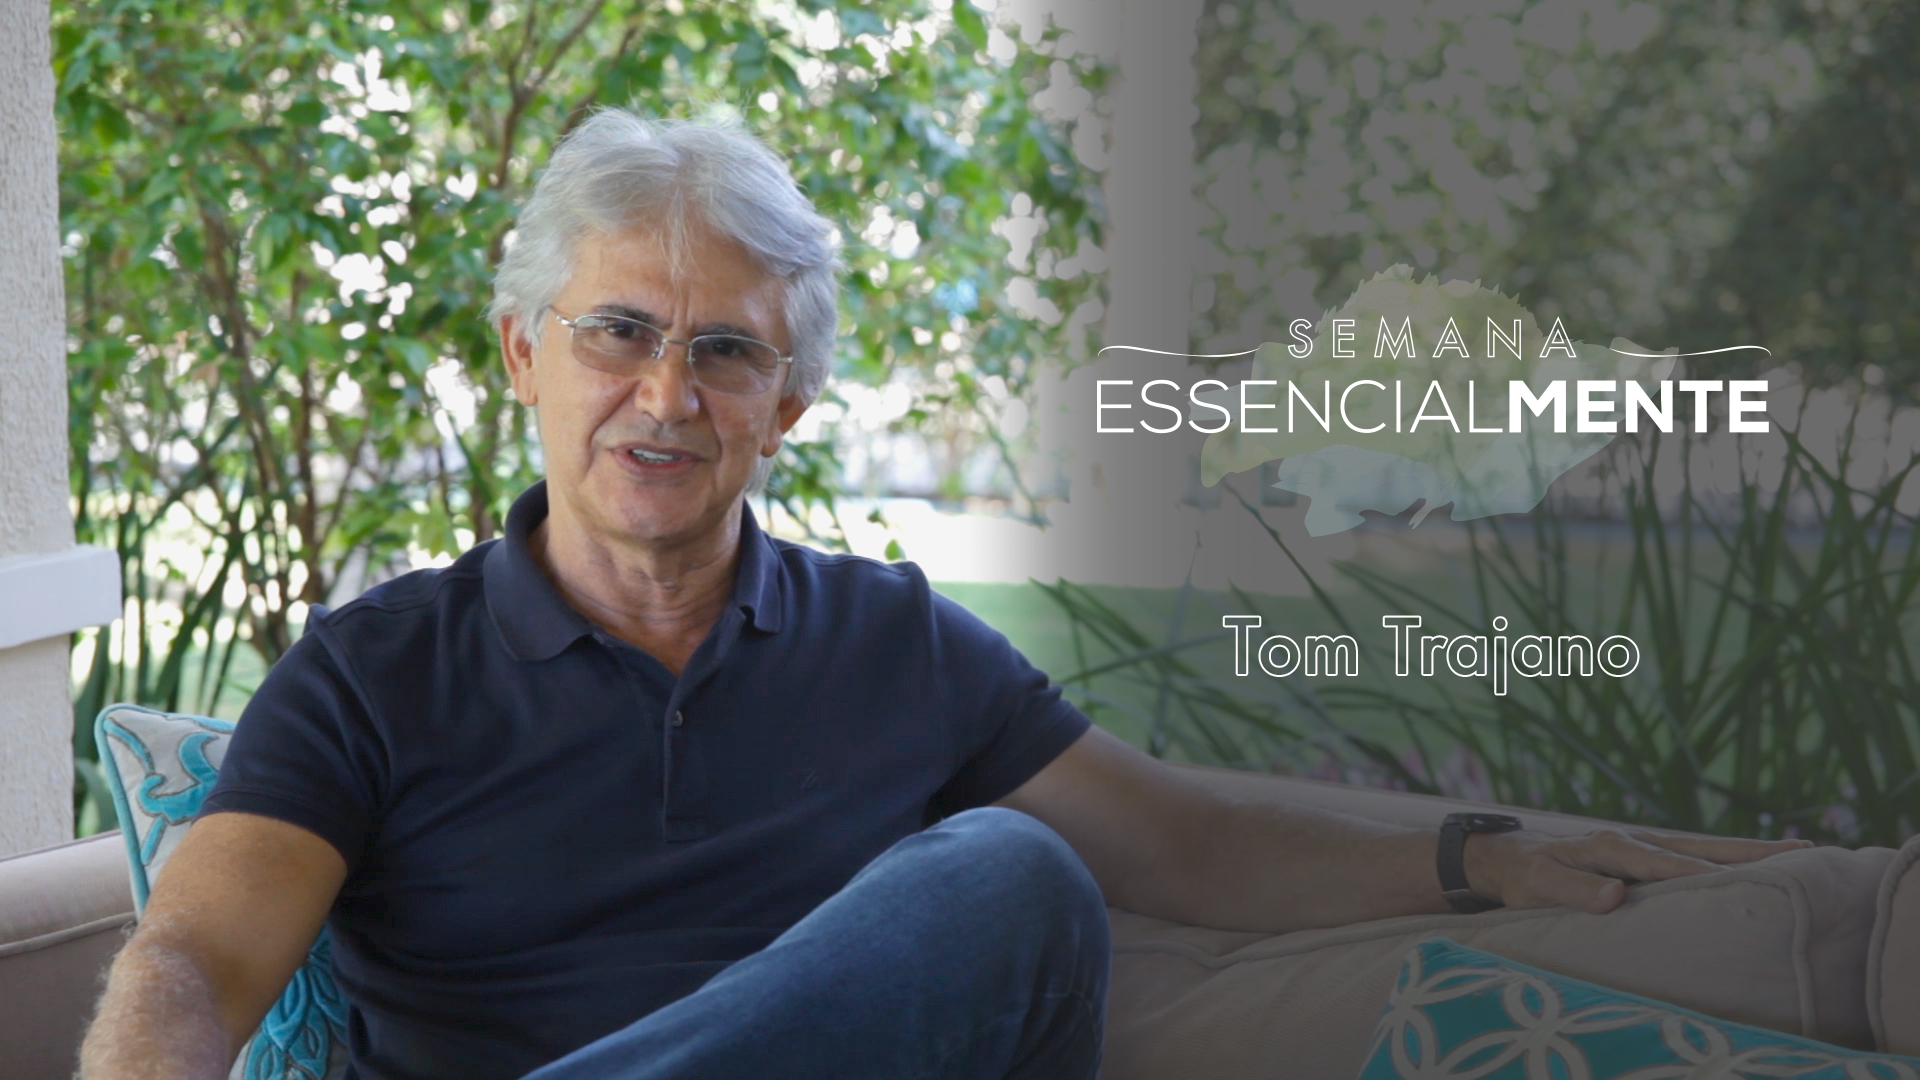 Semana Essencialmente: veja a mini palestra de Tom Trajano na íntegra